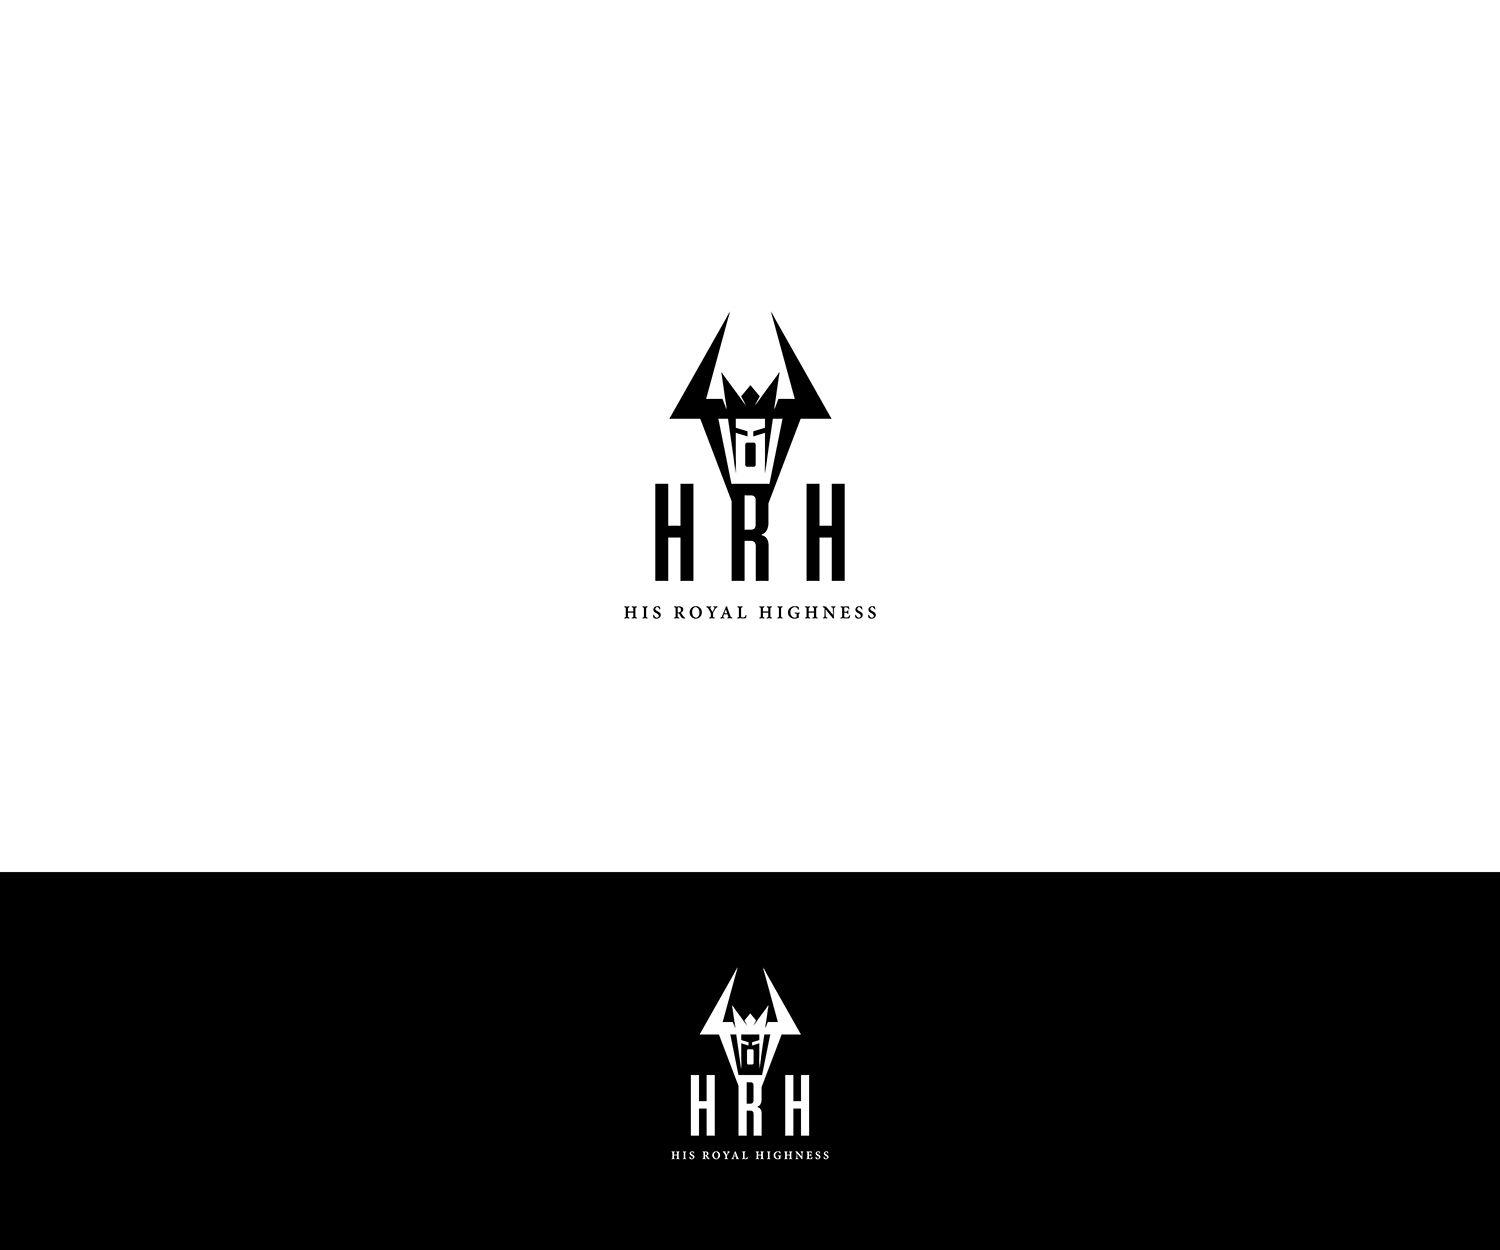 Apparel Retailer Logo - Serious, Modern, Retail Logo Design for HRH or His Royal Highness by ...